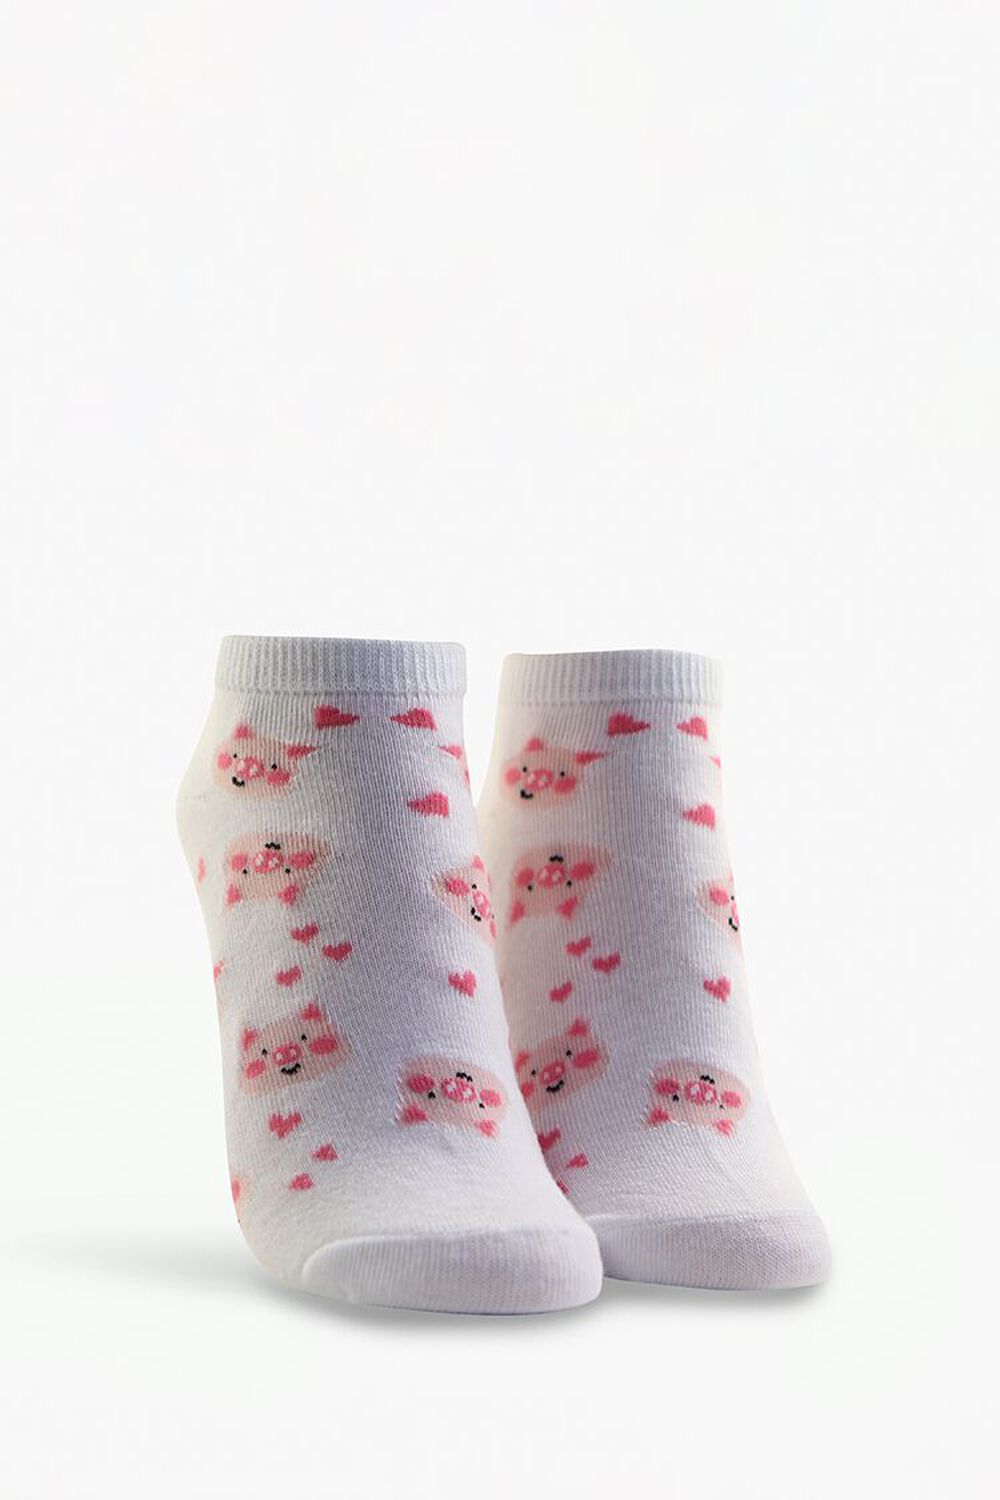 WHITE/MULTI Pig Print Ankle Socks, image 1